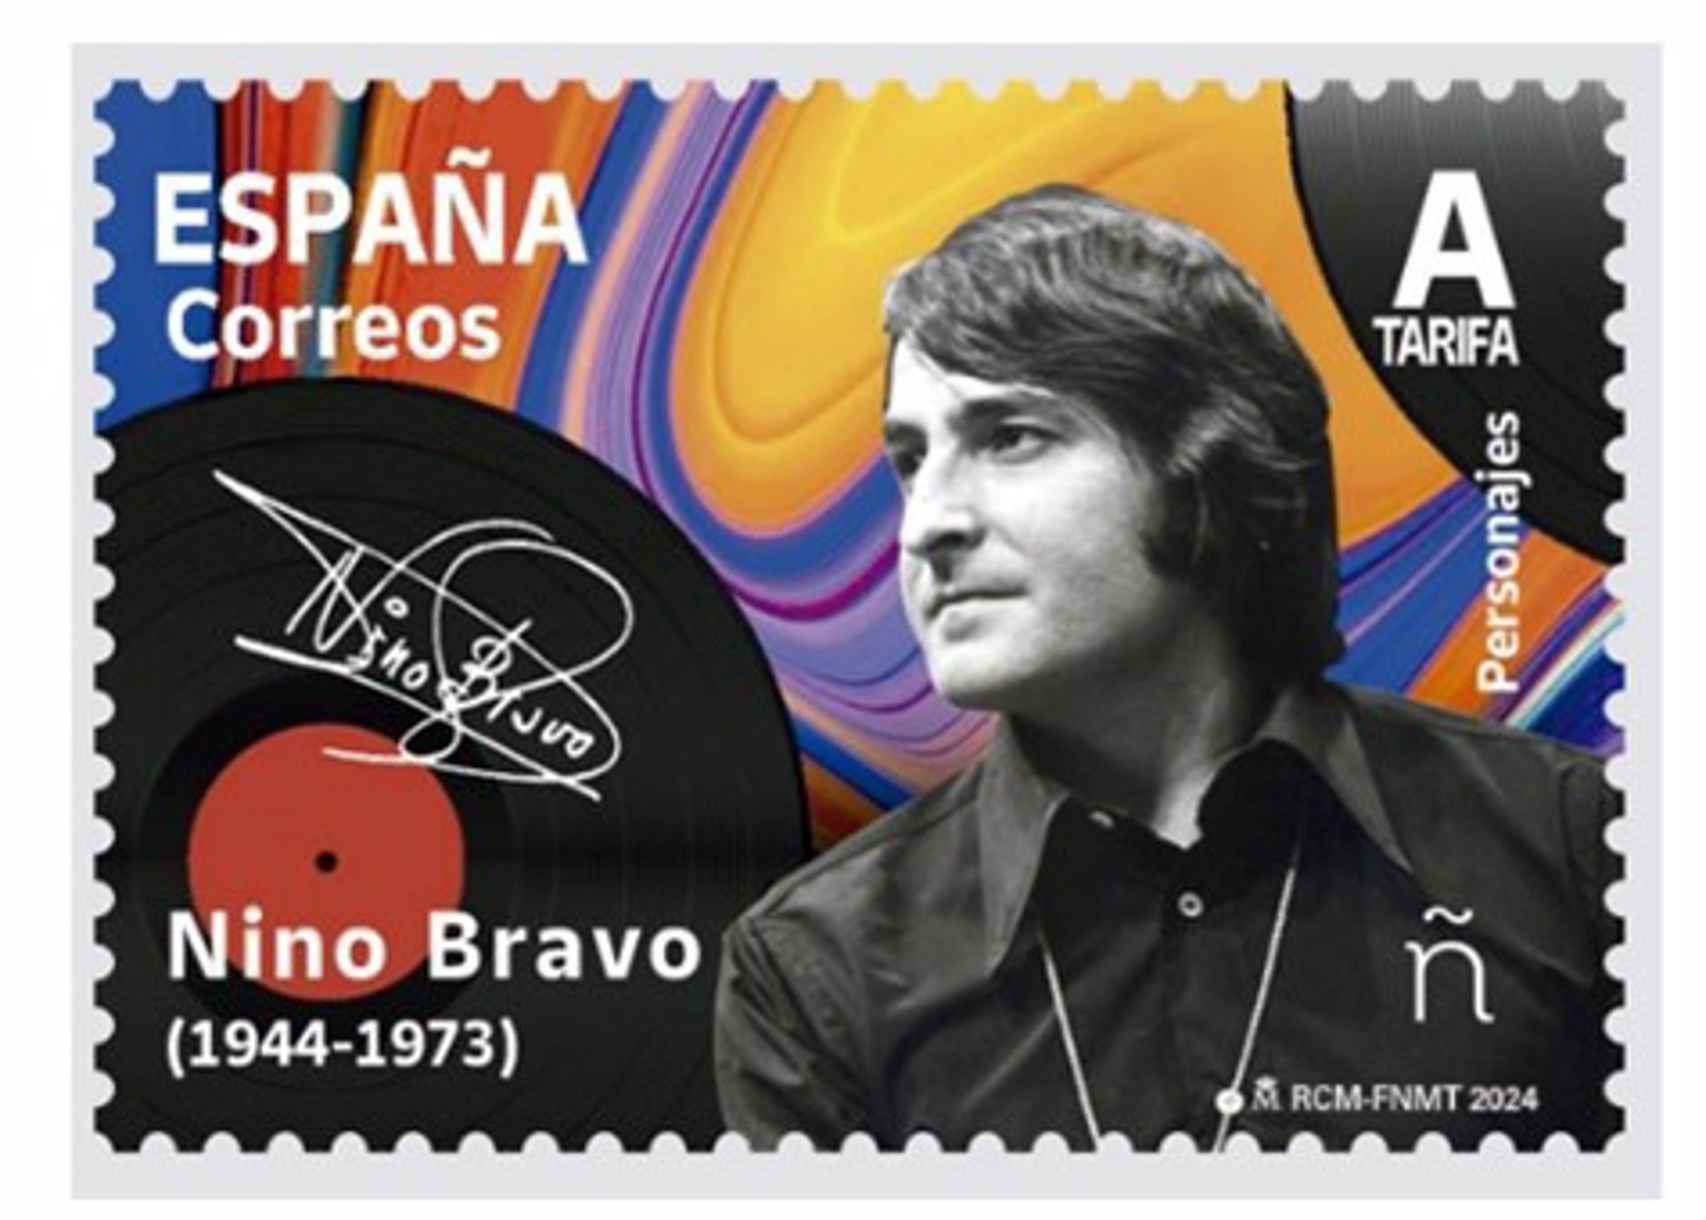 Sello dedicado al cantante valenciano Nino Bravo emitido por Correos. Europa Press